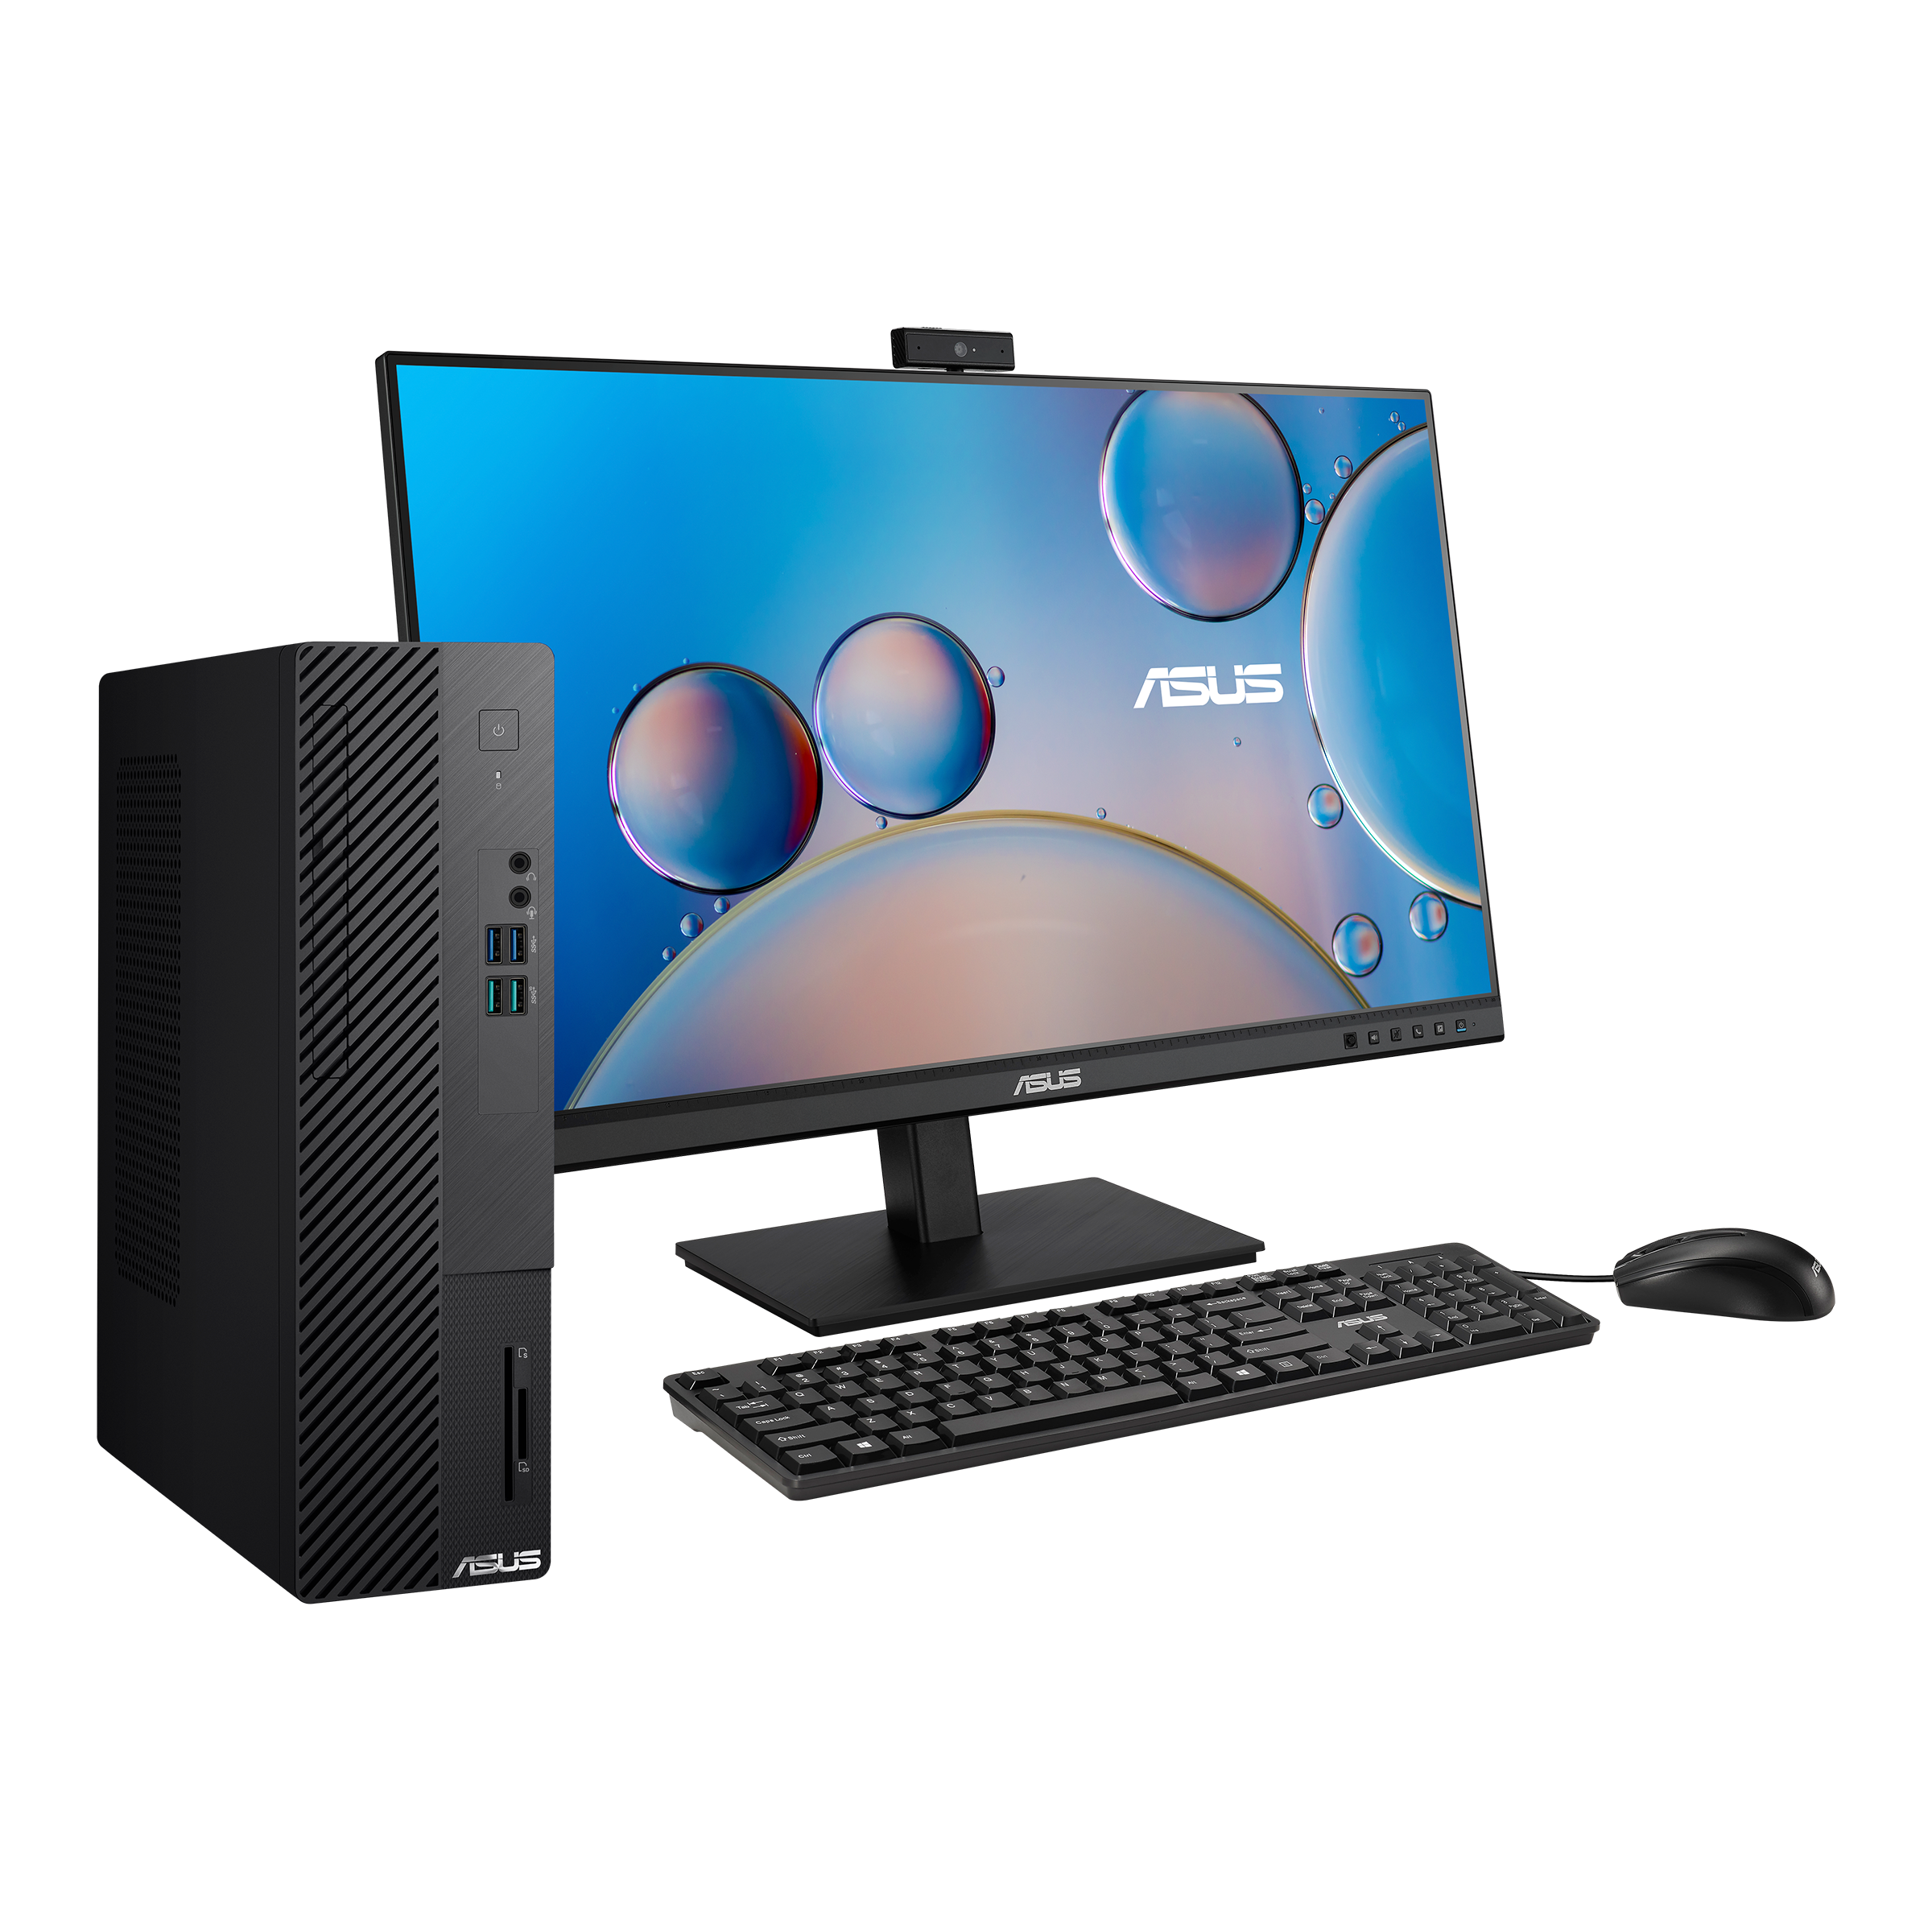 ASUS S500SD | ASUS Desktop | デスクトップパソコン | ディスプレイ 